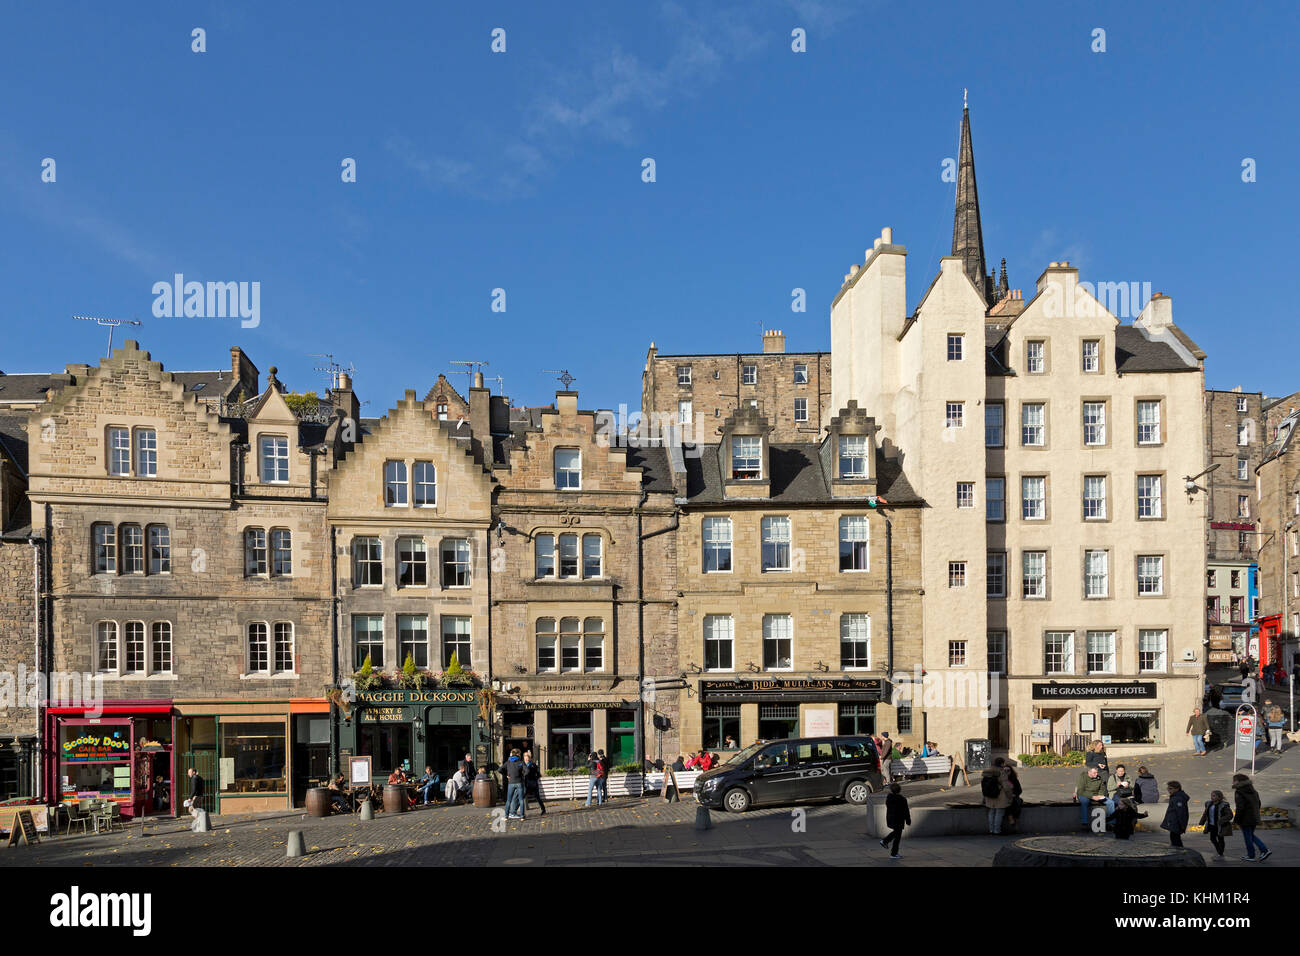 Edinburgh Grassmarket High Resolution Stock Photography and Images - Alamy